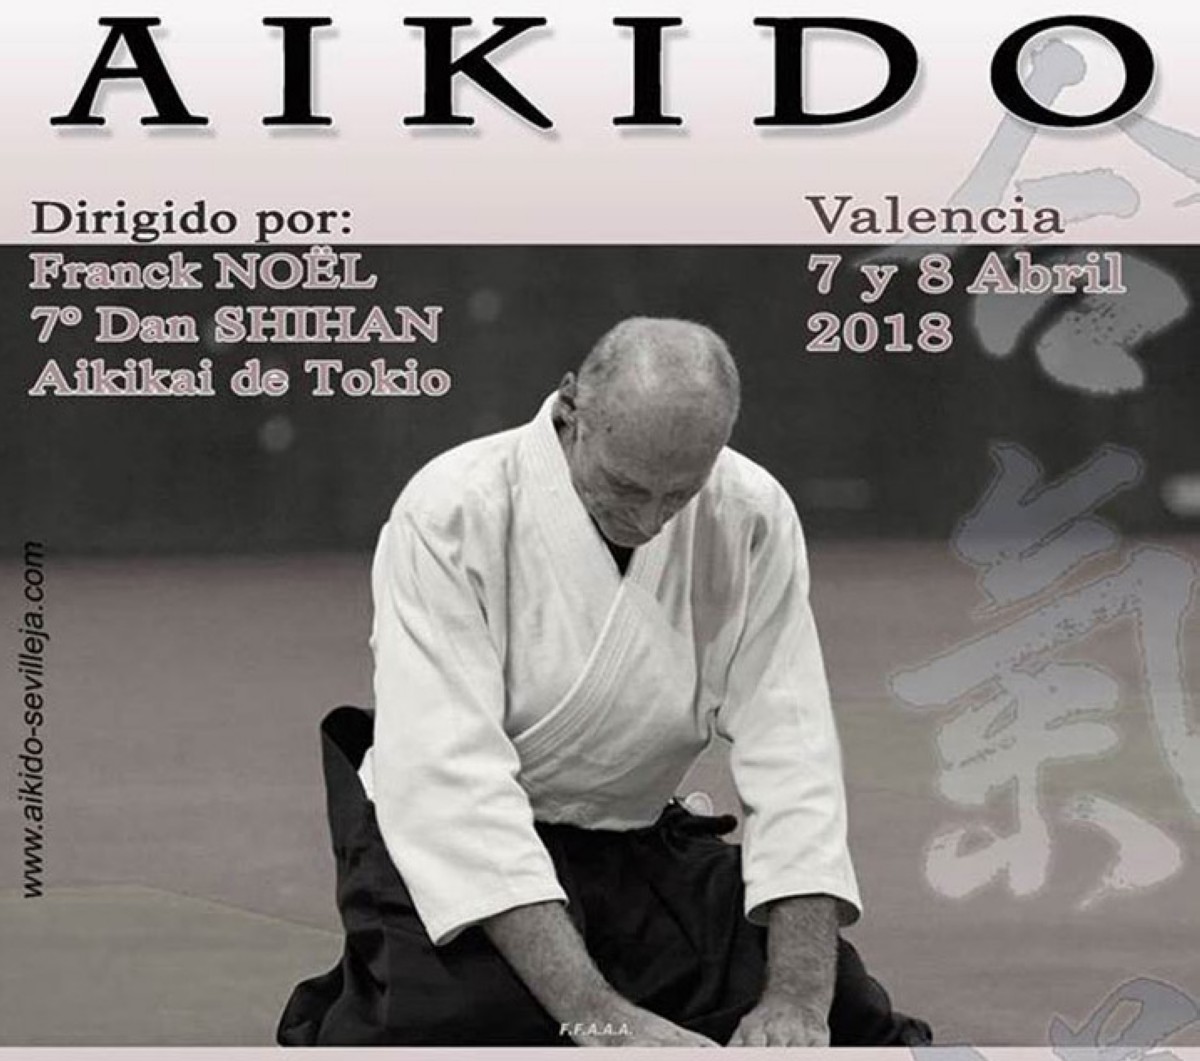 Aikido con Franck Noël en Valencia